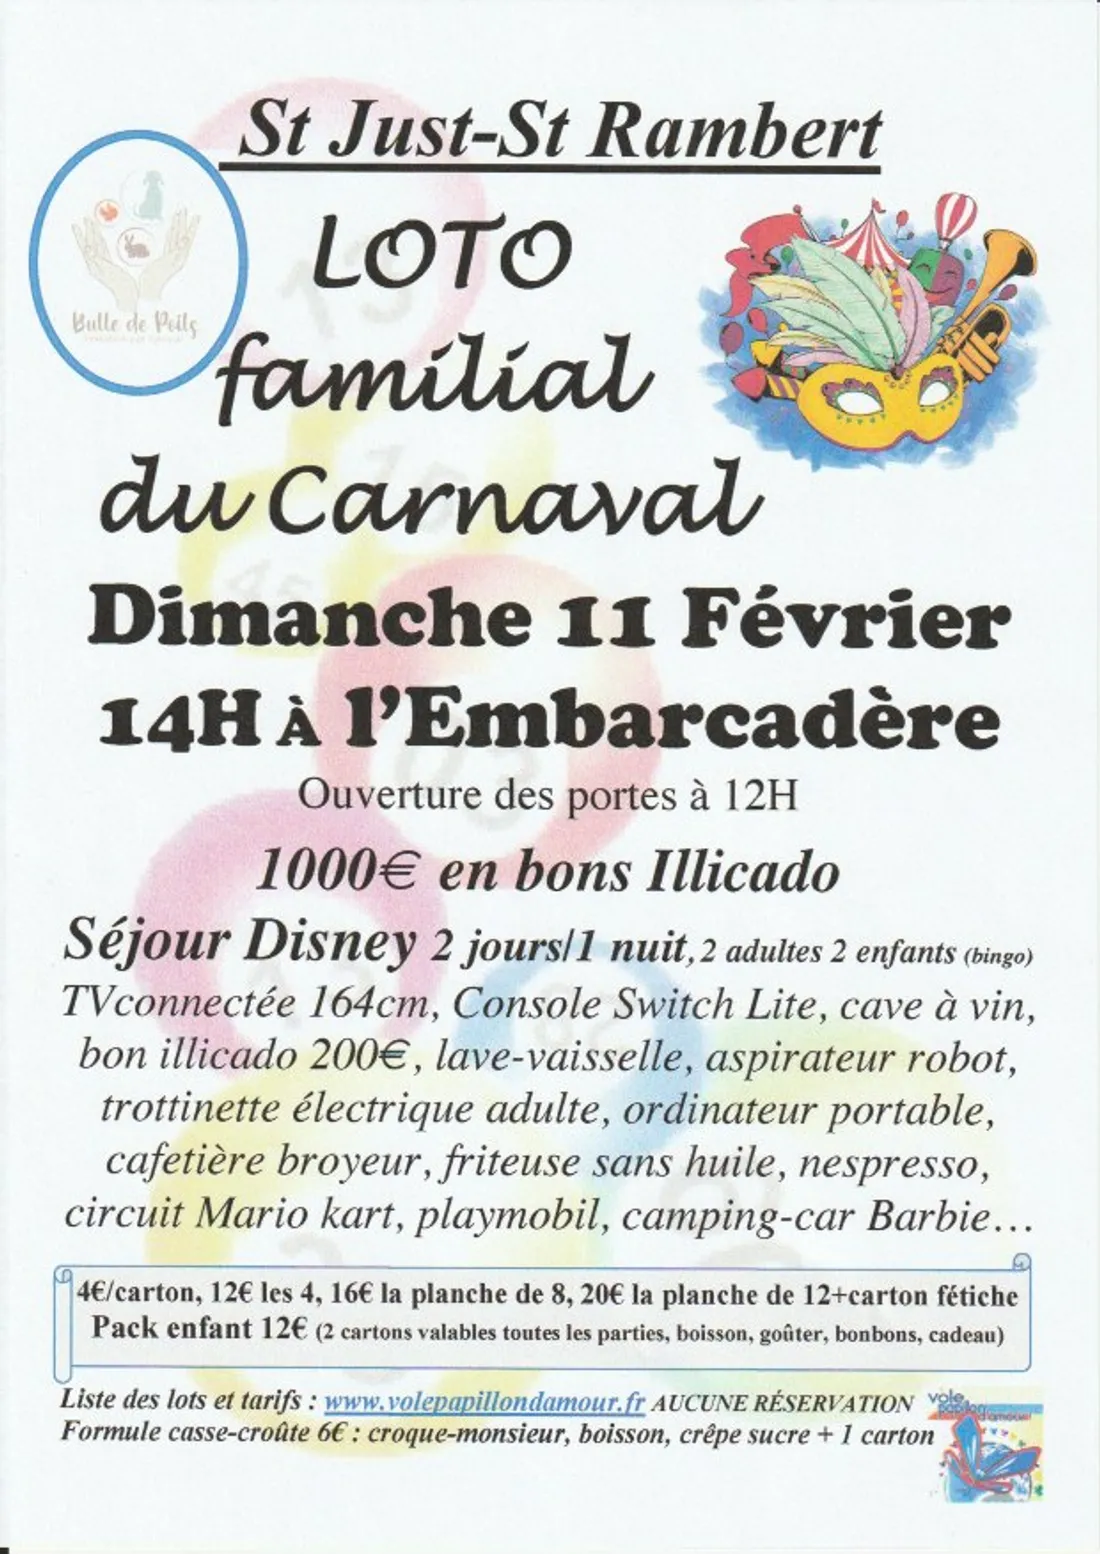 Loto du Carnaval à St-Just-St-Rambert